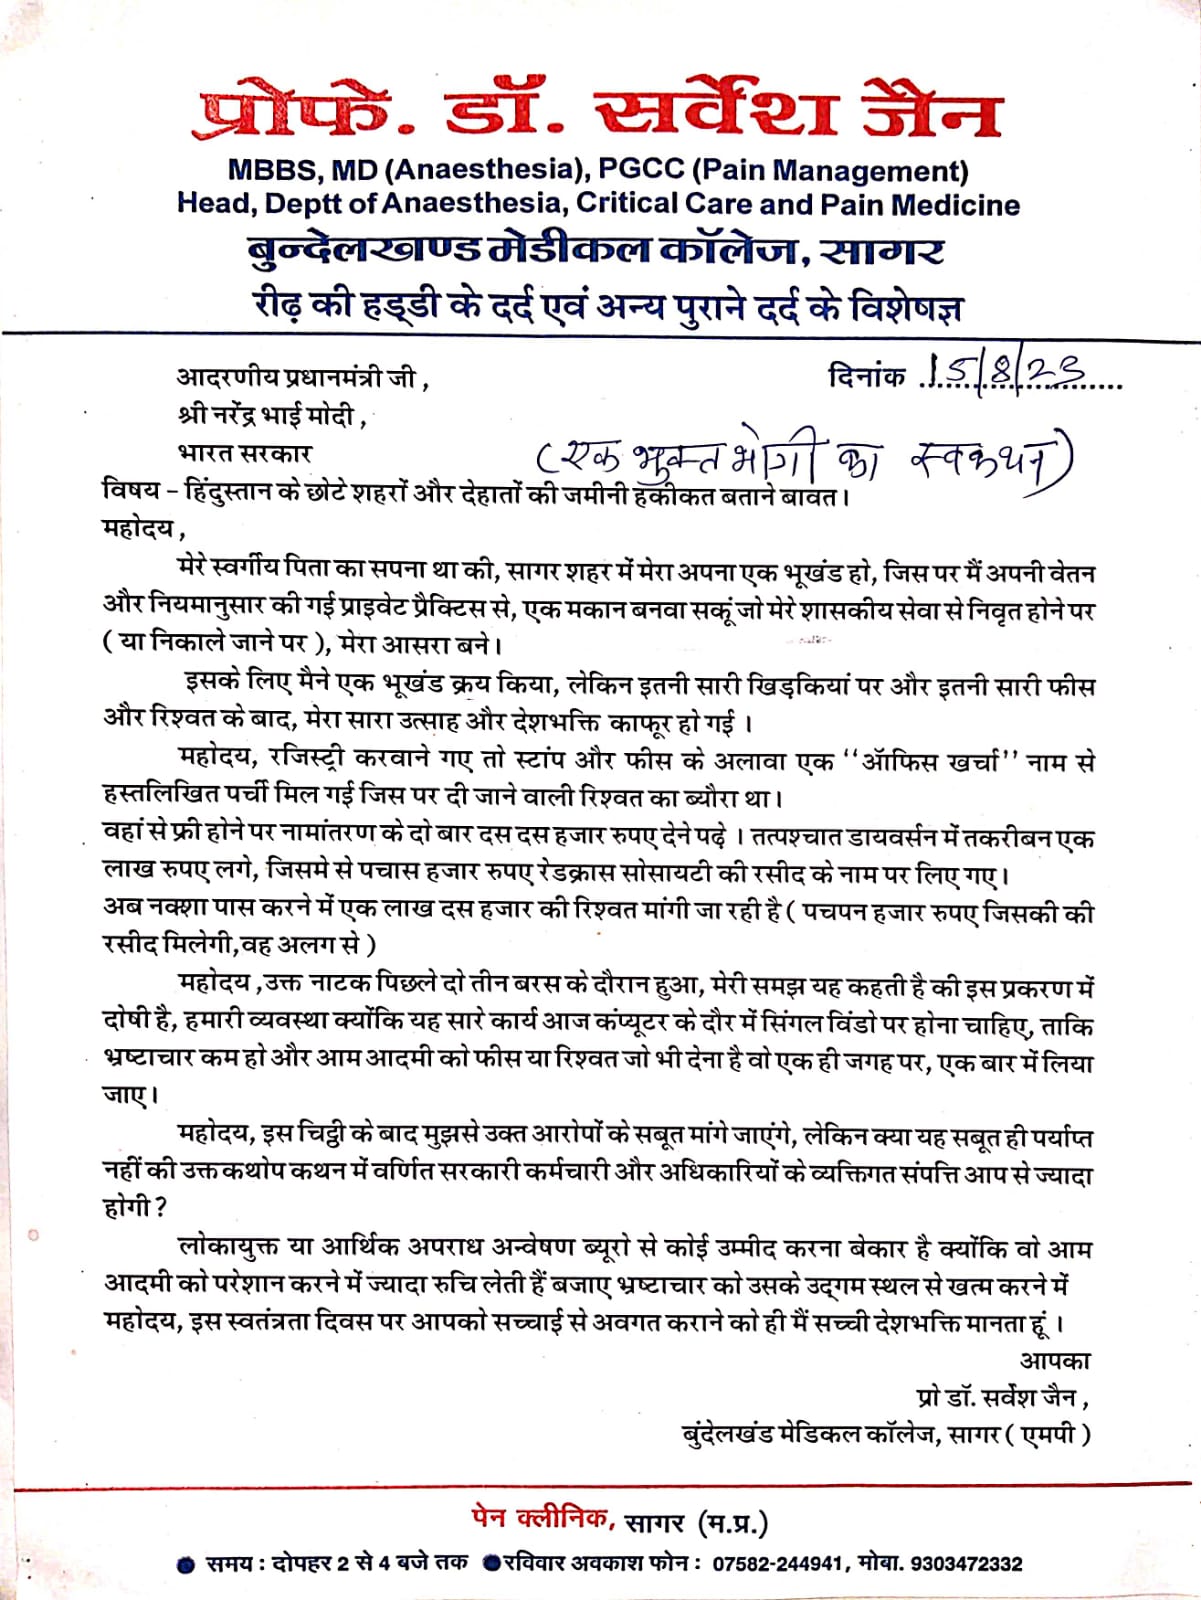 Bundelkhand medical college modi letter